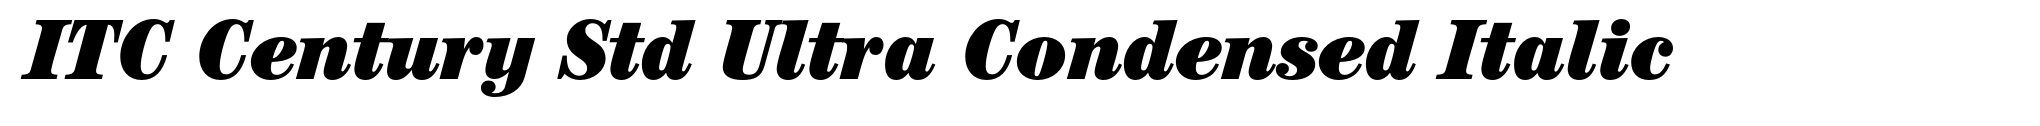 ITC Century Std Ultra Condensed Italic image